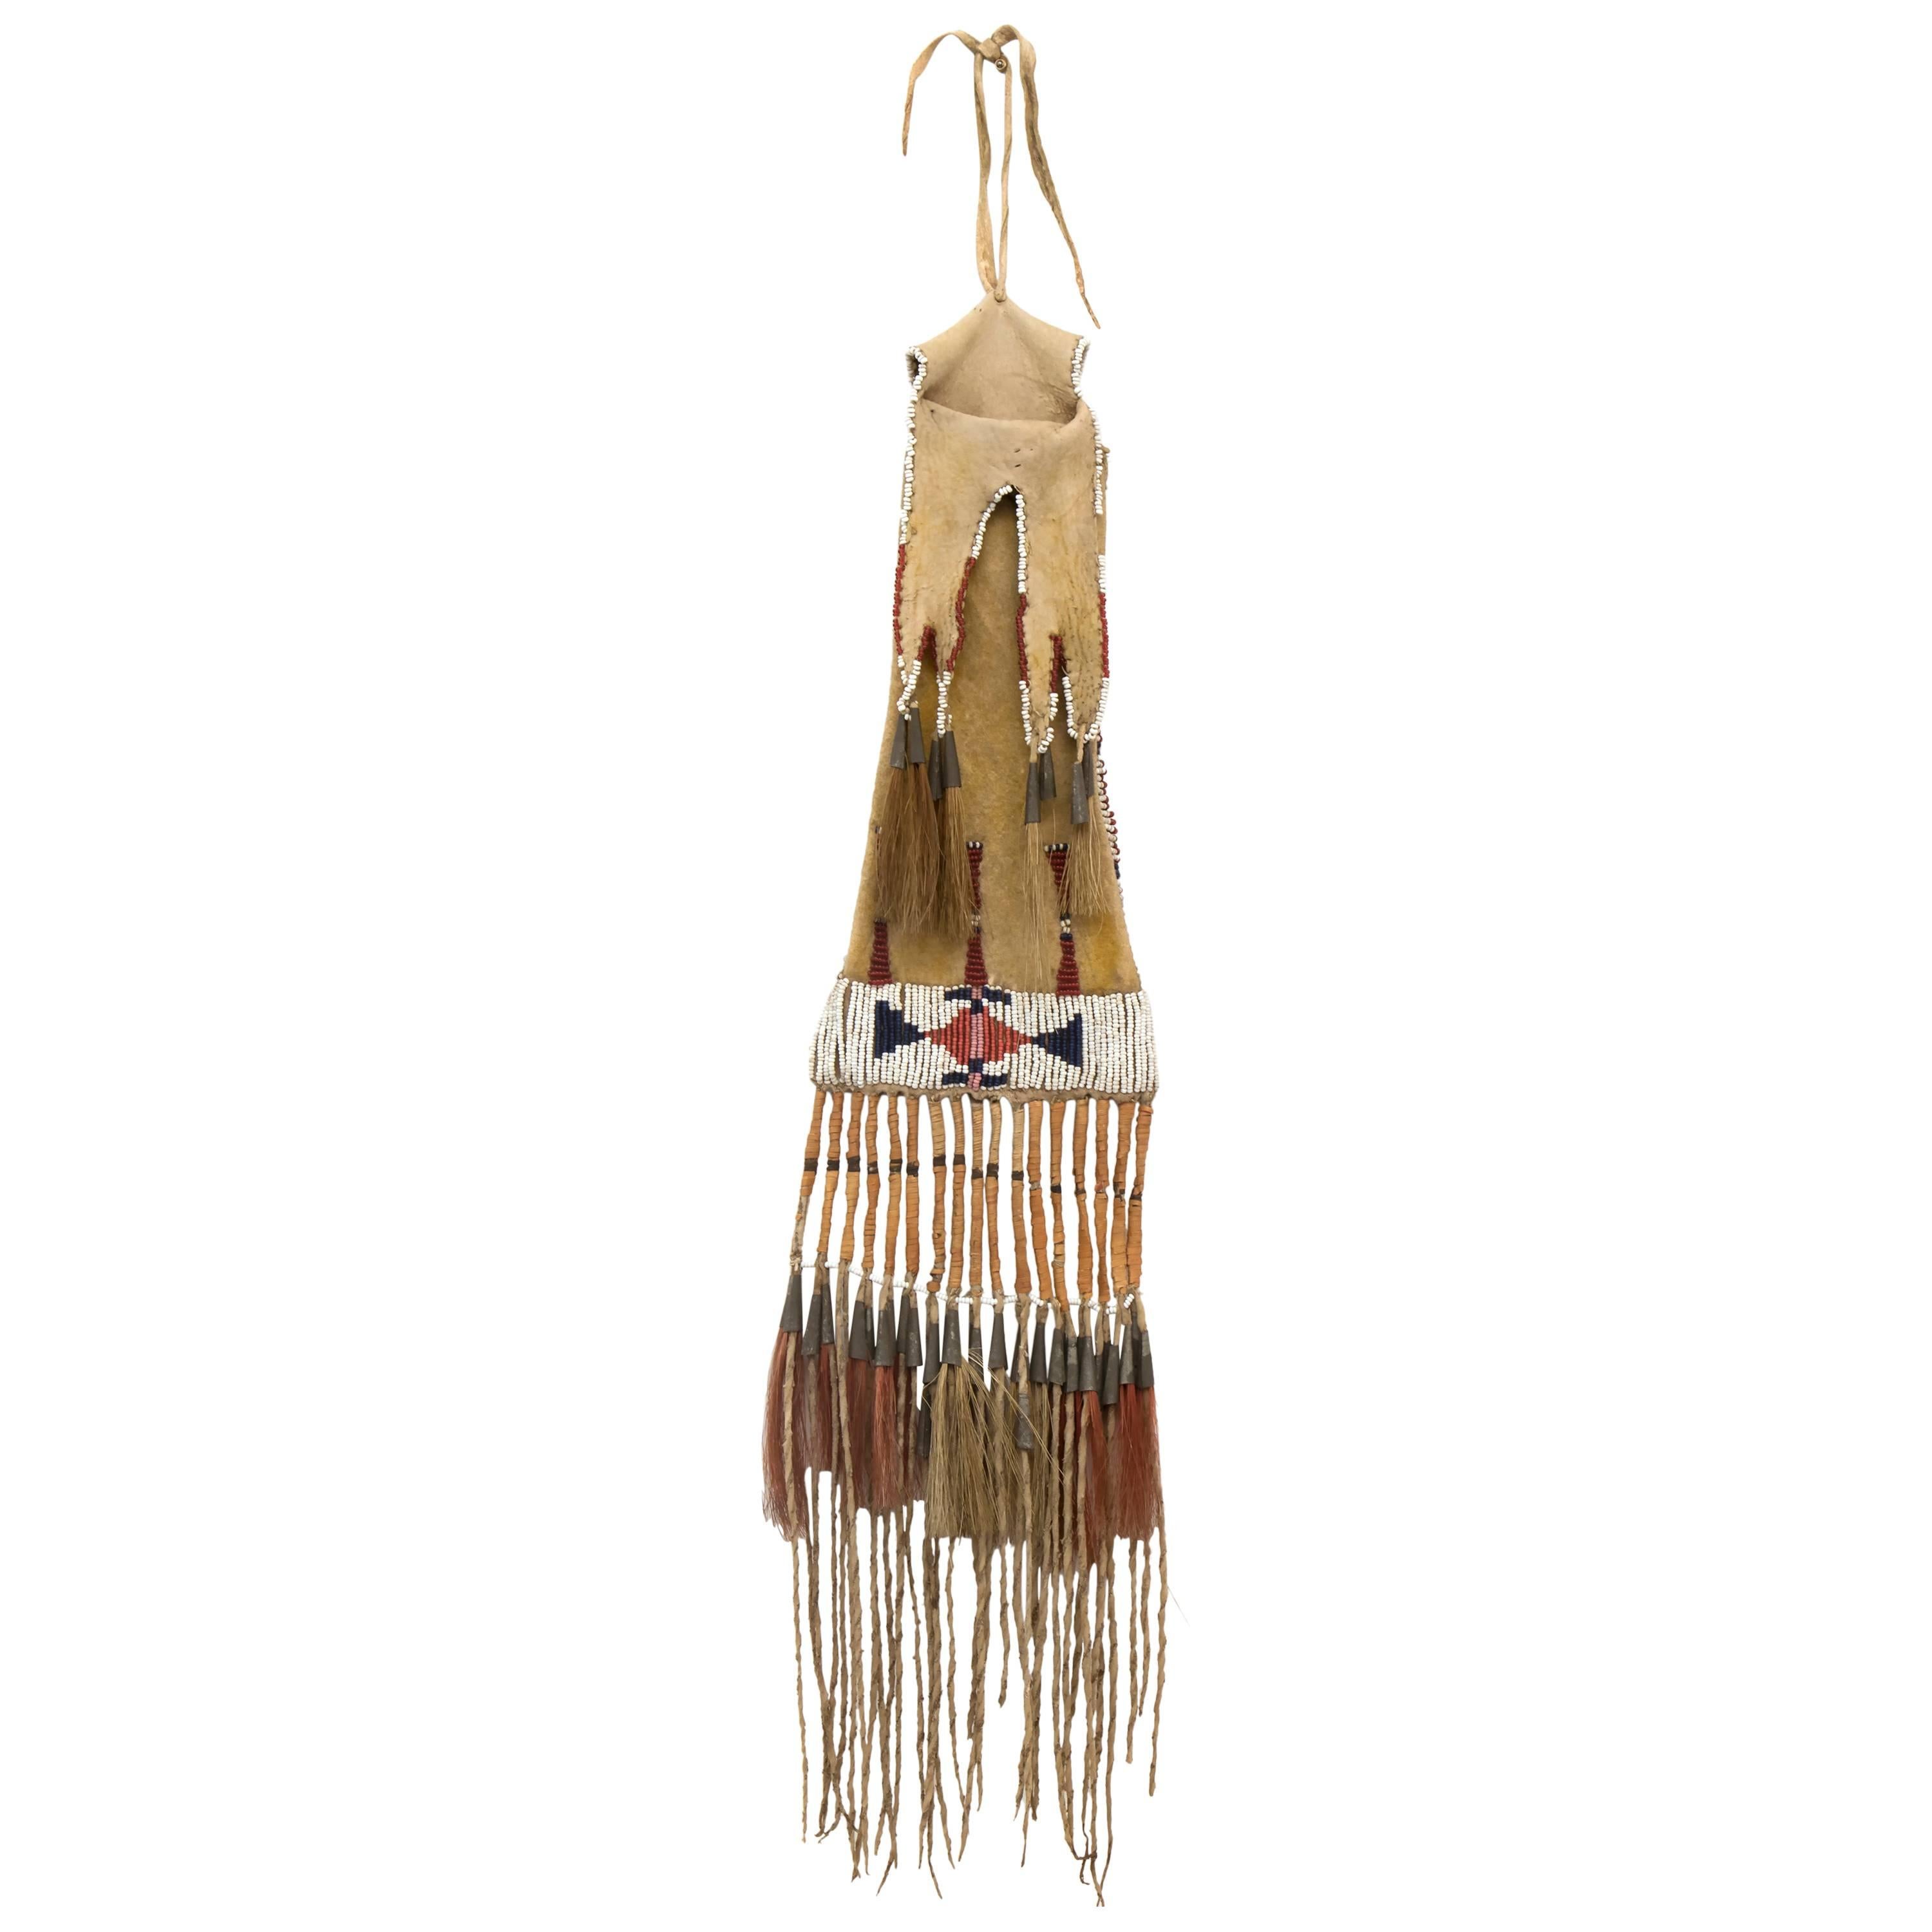 Antique Native American Tobacco Bag, Arapaho, circa 1875-1880